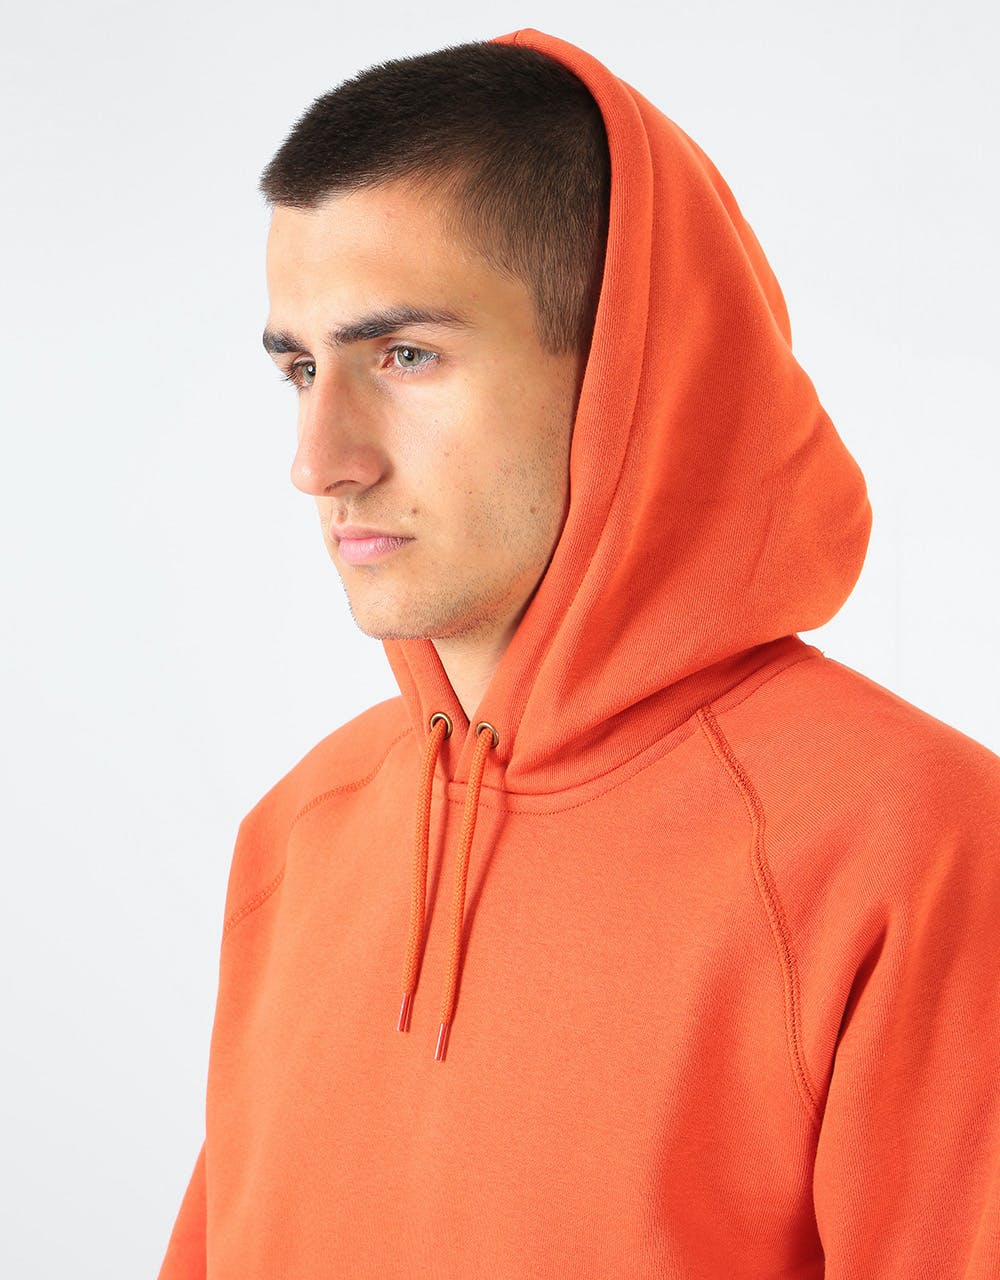 Carhartt WIP Hooded Chase Sweatshirt - Brick Orange/Gold